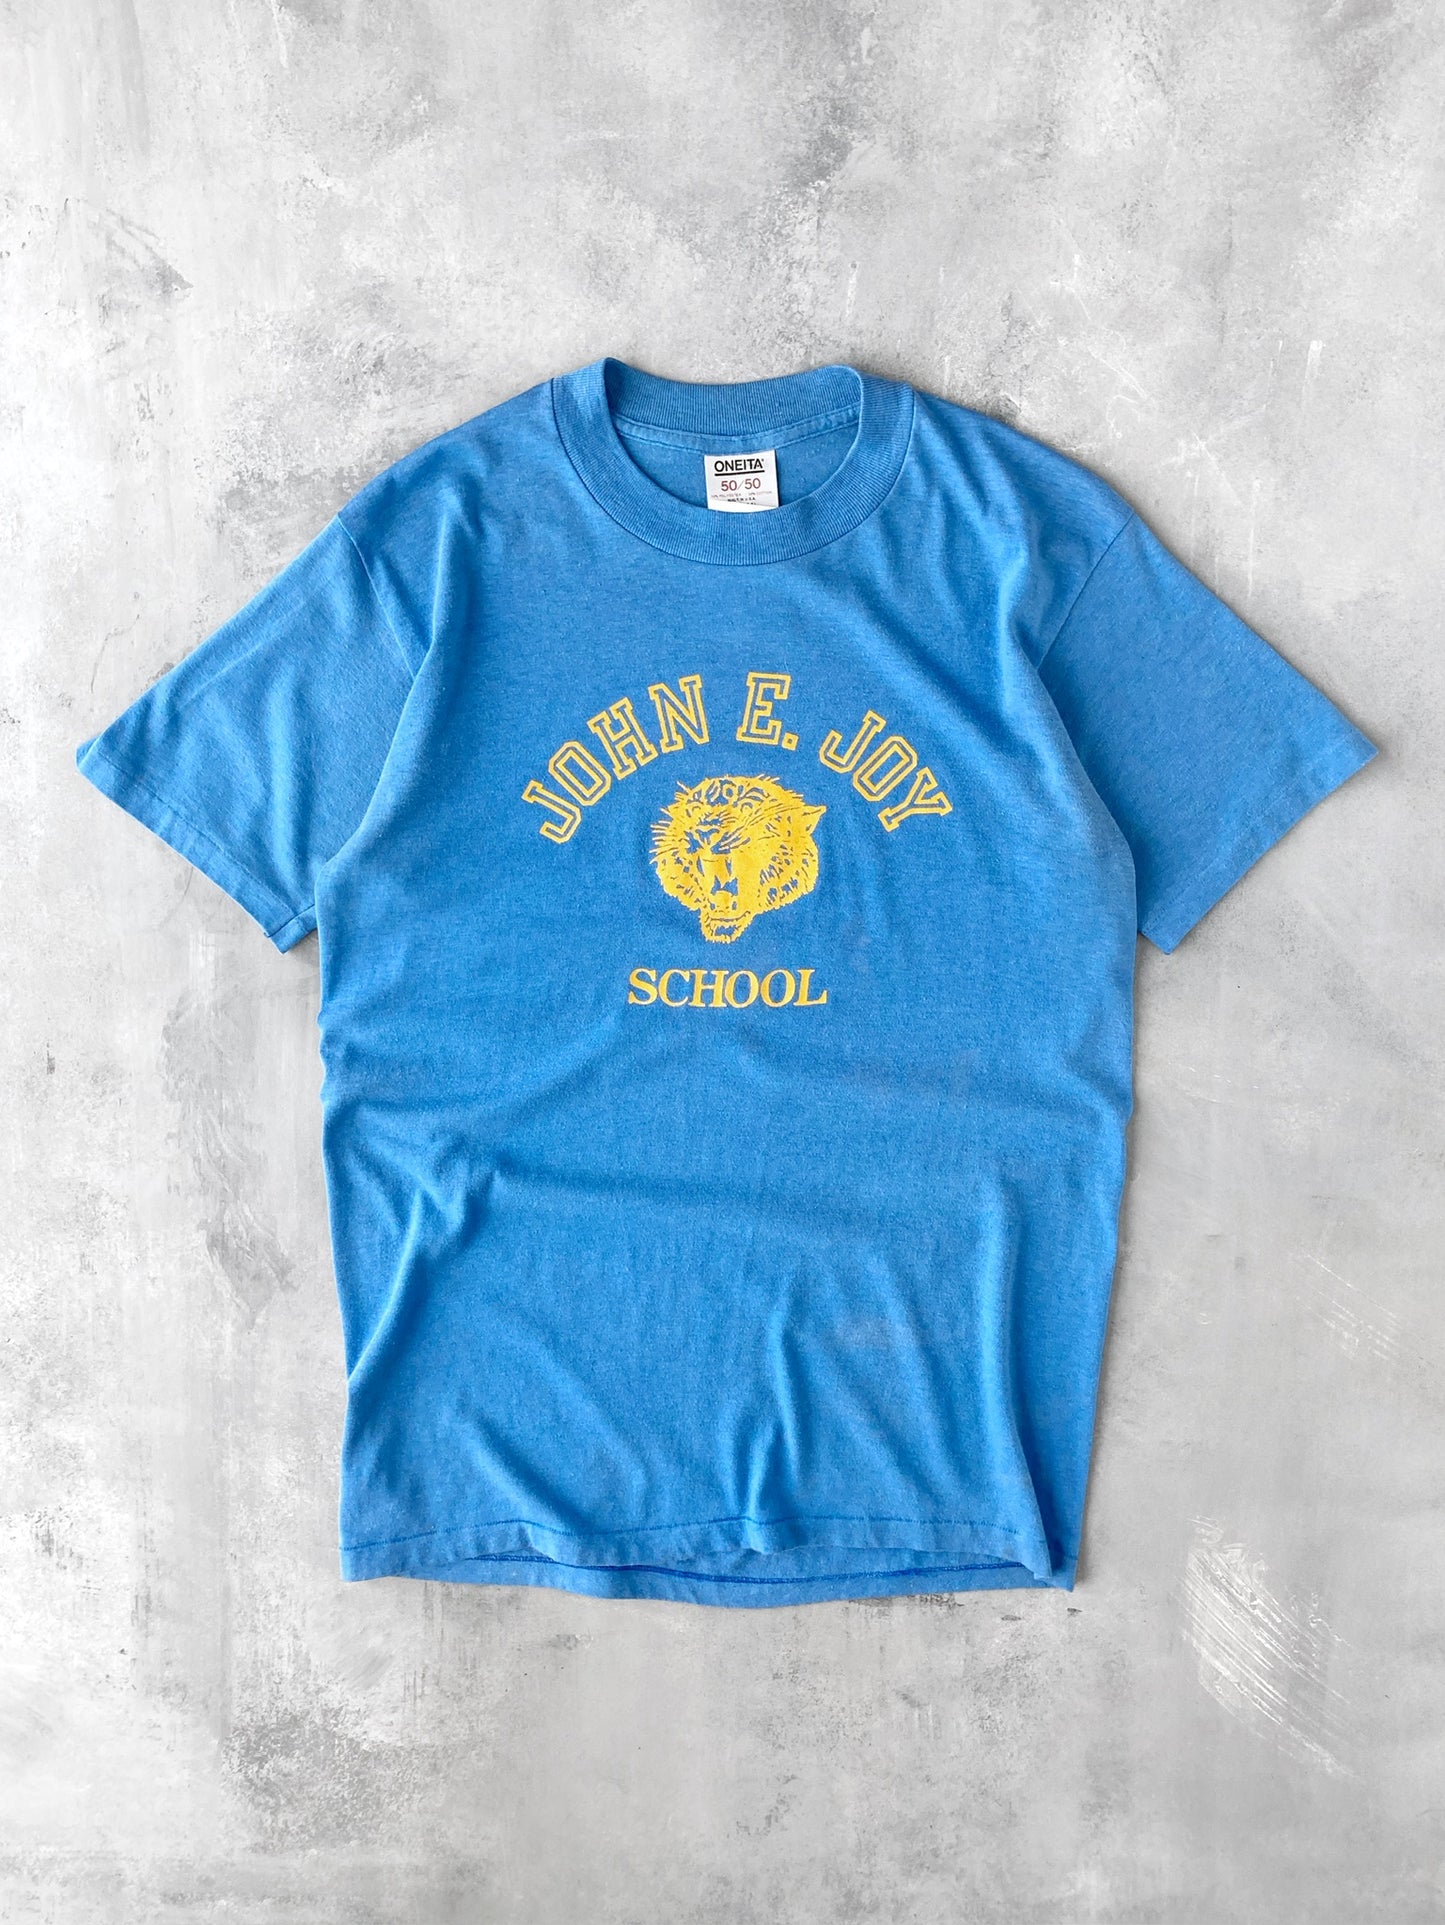 John E. Joy School T-Shirt 90's - Medium